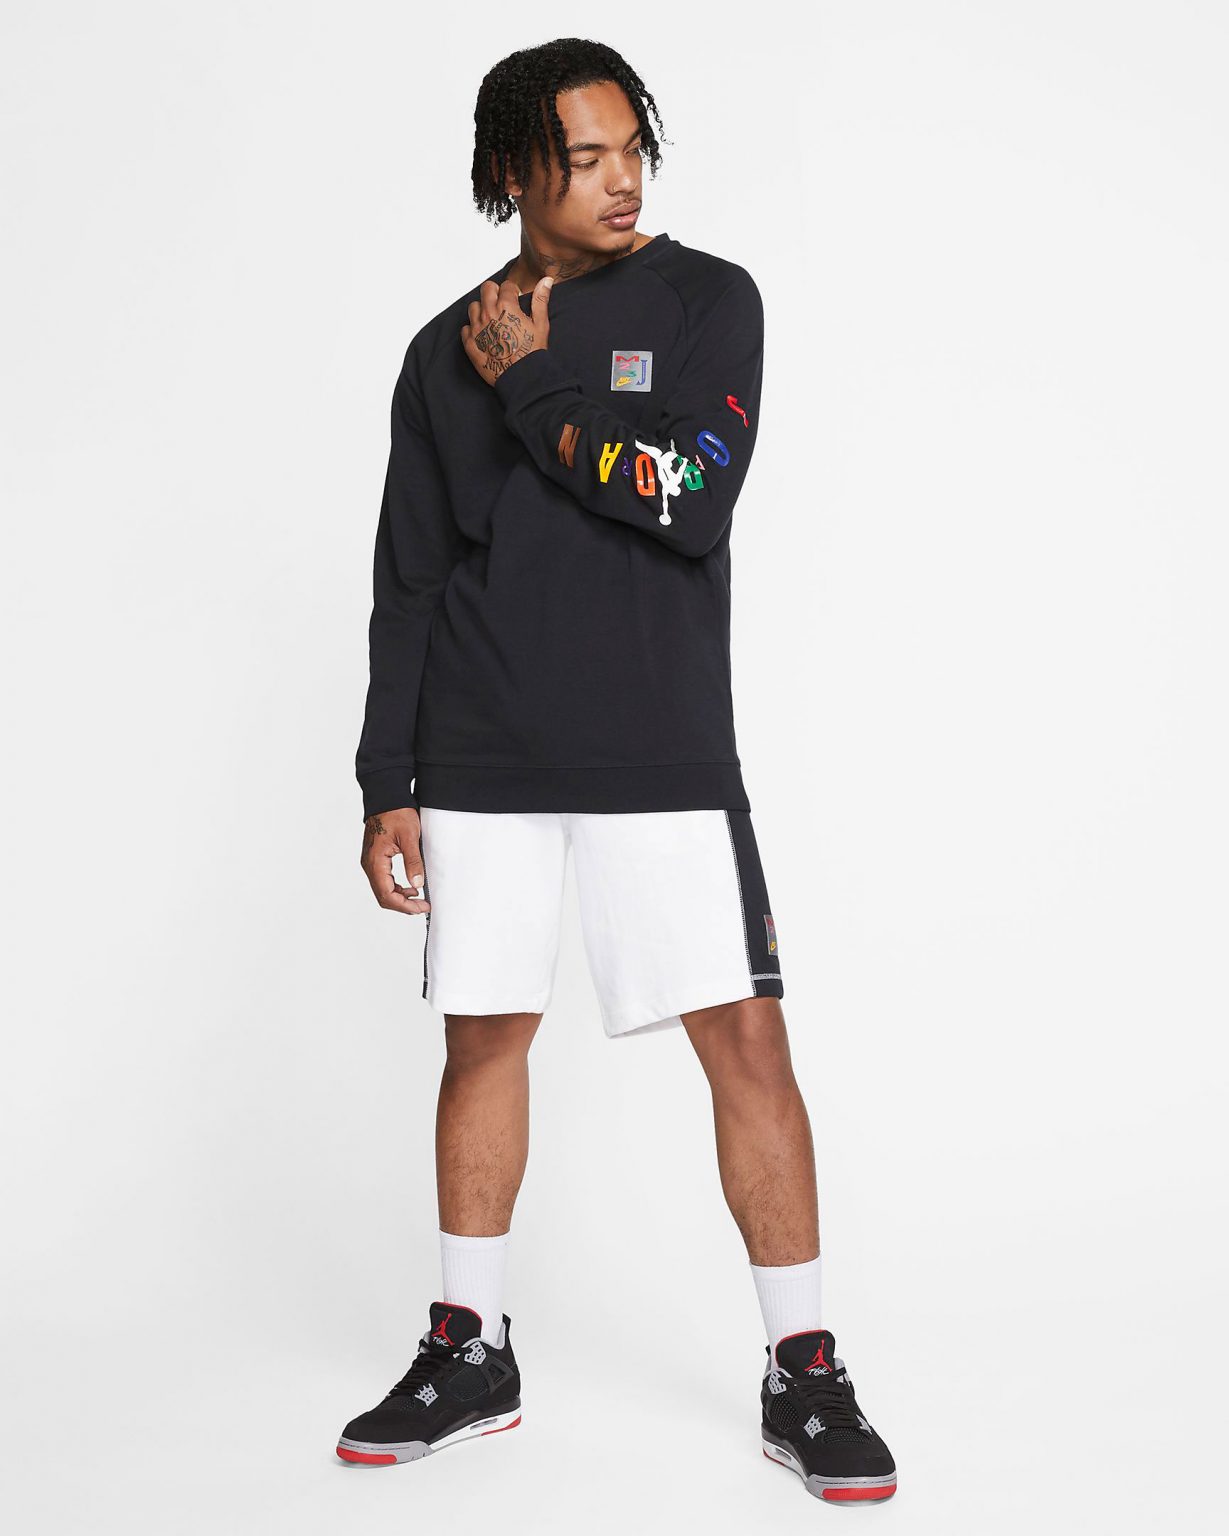 Jordan 4 Black Cat 2020 Sneaker Outfits | SneakerFits.com